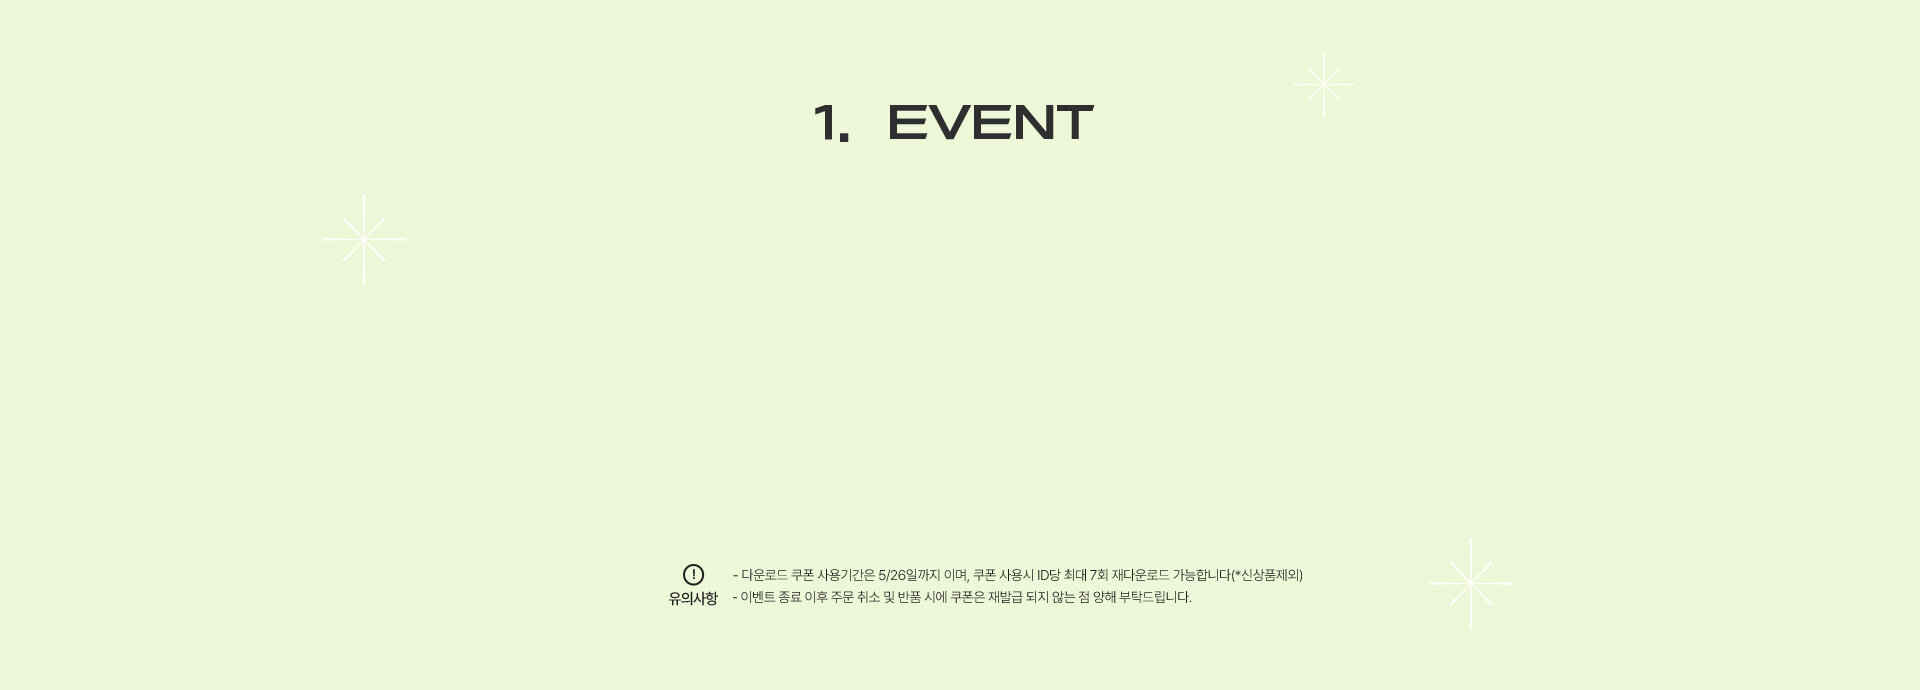 EVENT1